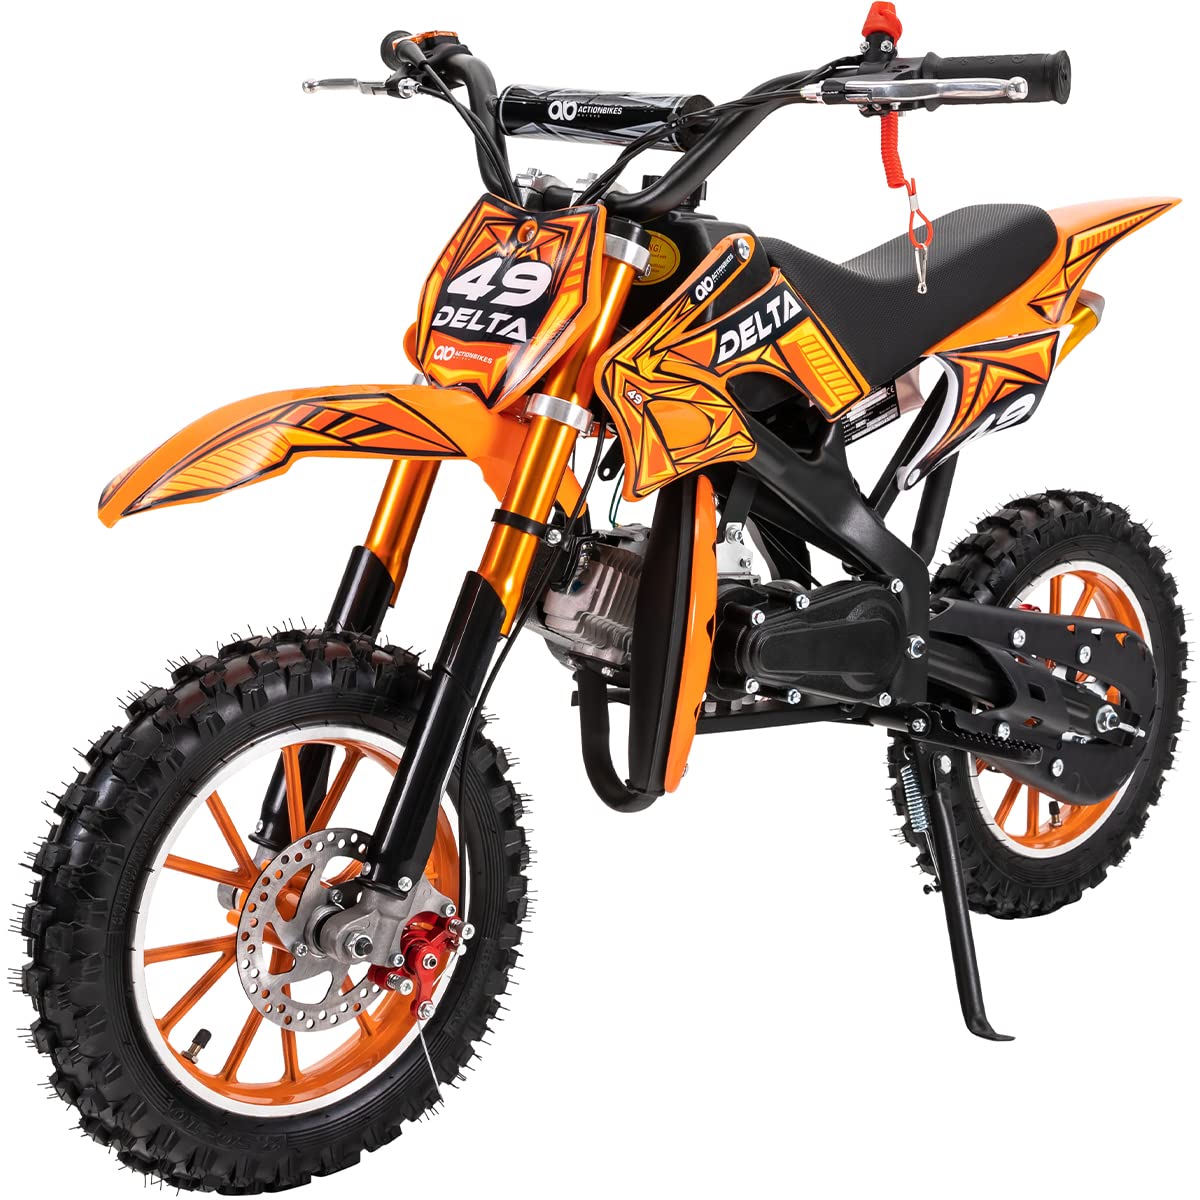 Actionbikes Motors Kinder Mini Elektro Crossbike Delta 49cc | 2-Takt 49ccm Motor - Scheibenbremsen - Bis zu 35-40 km/h- Pocket Bike - Motorrad - Motocross - Dirtbike - Enduro (Orange) von Actionbikes Motors